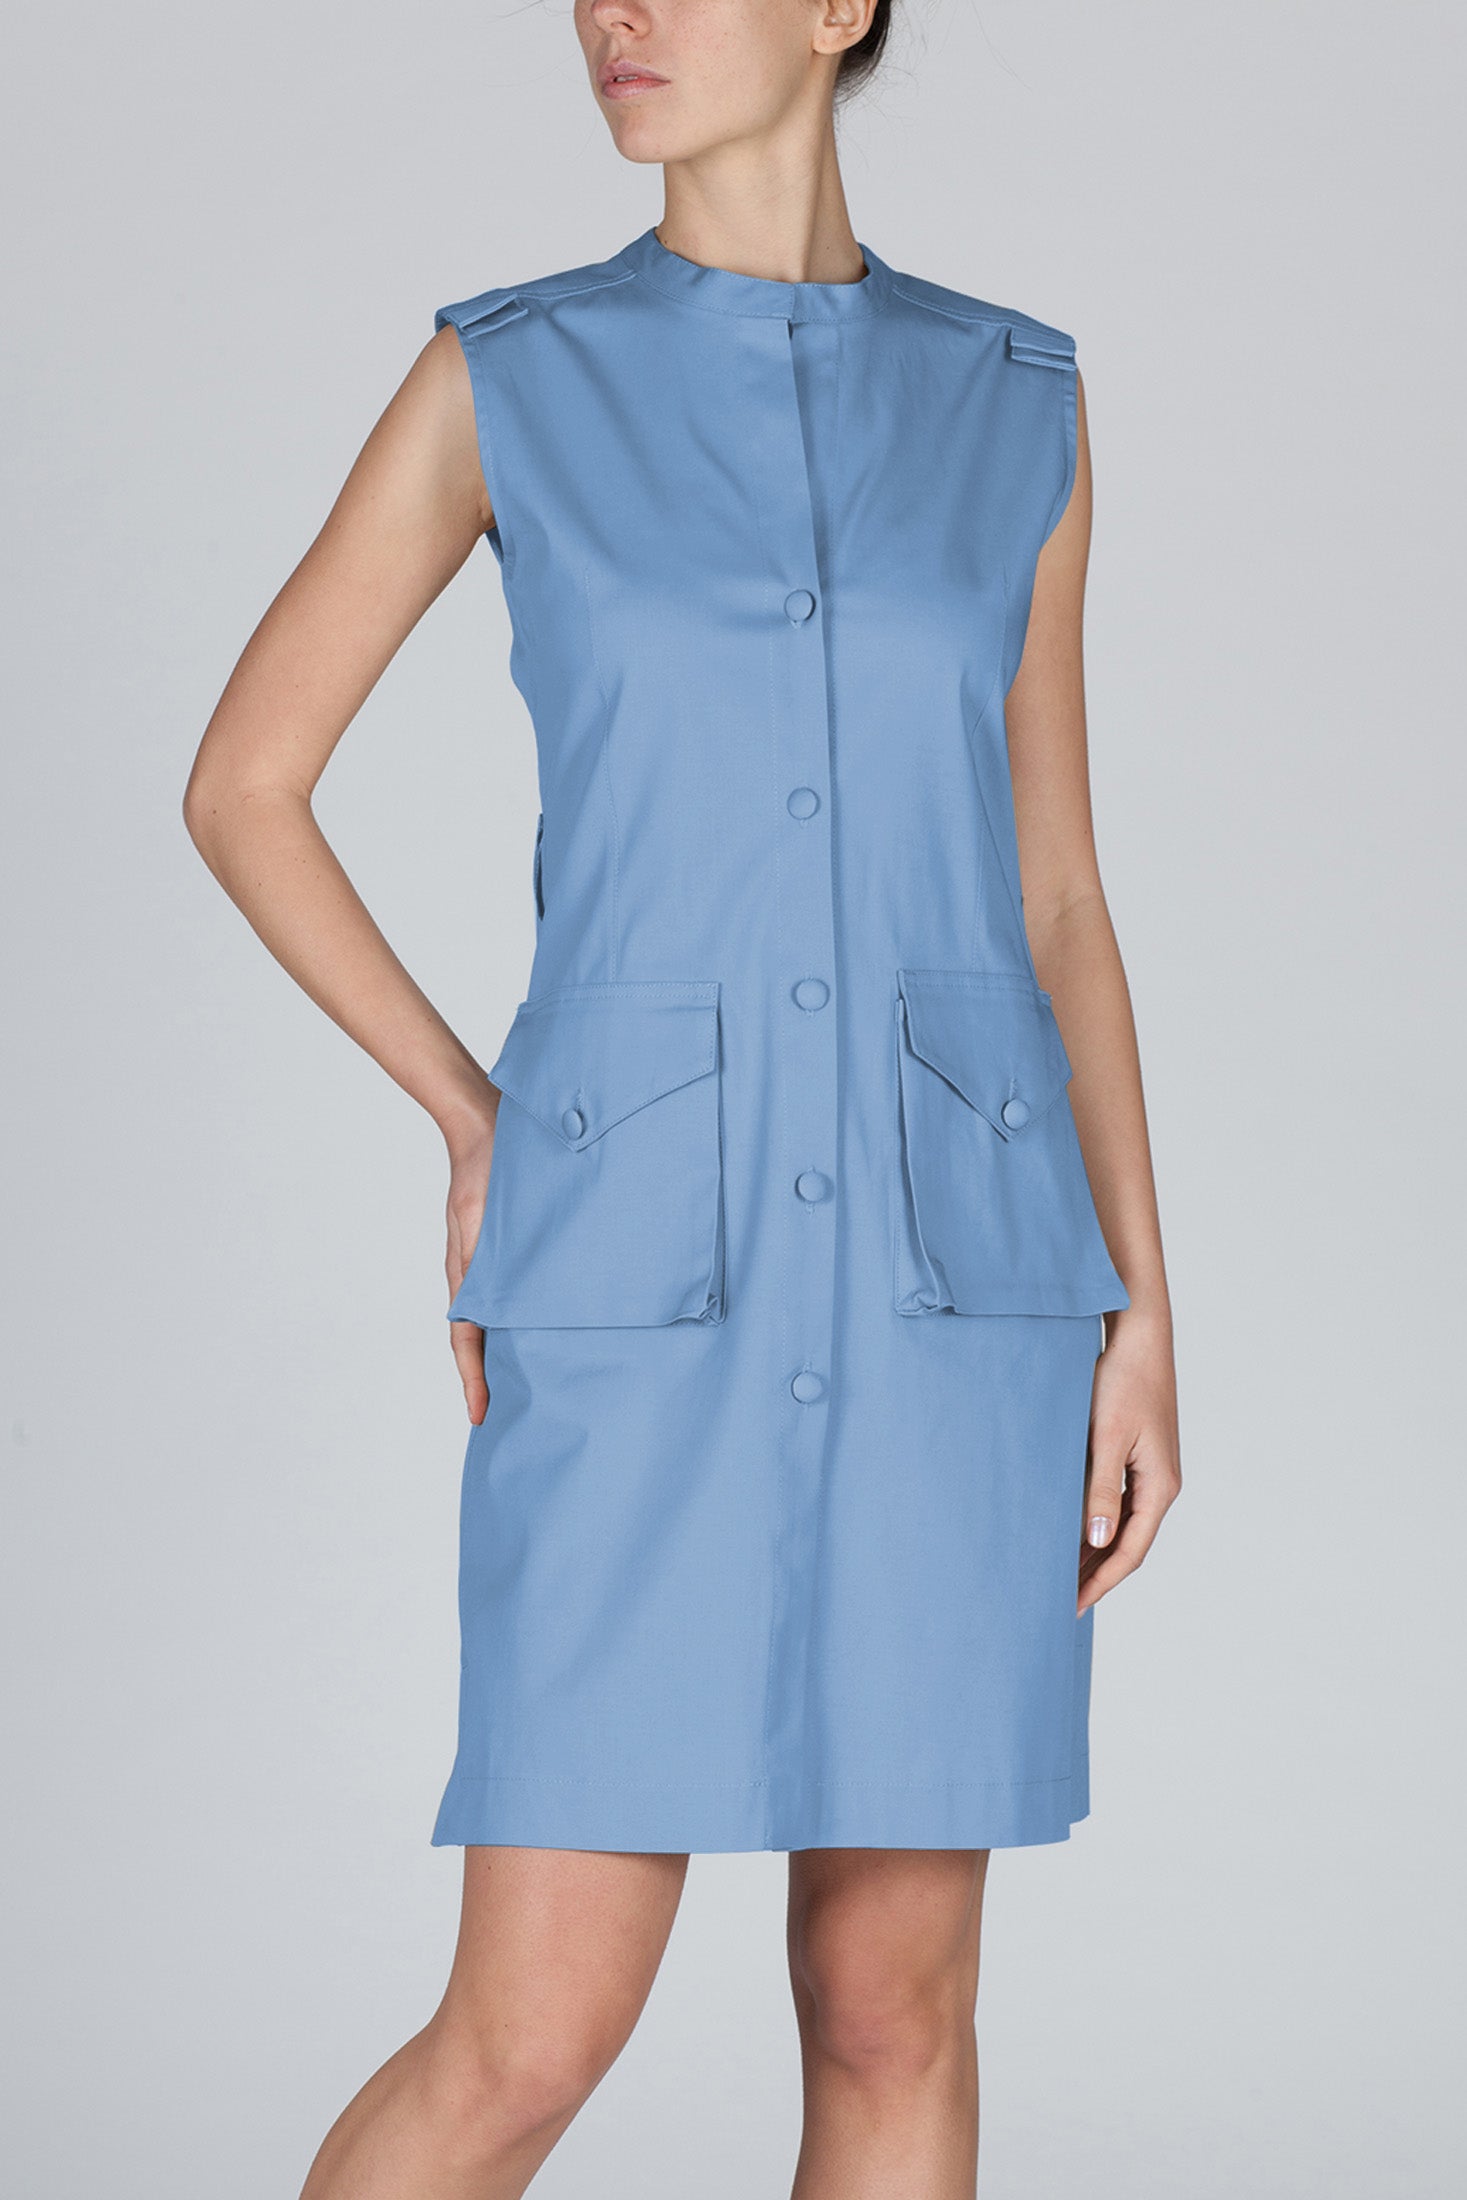 The Rebecca Vest/Dress - Baby Blue